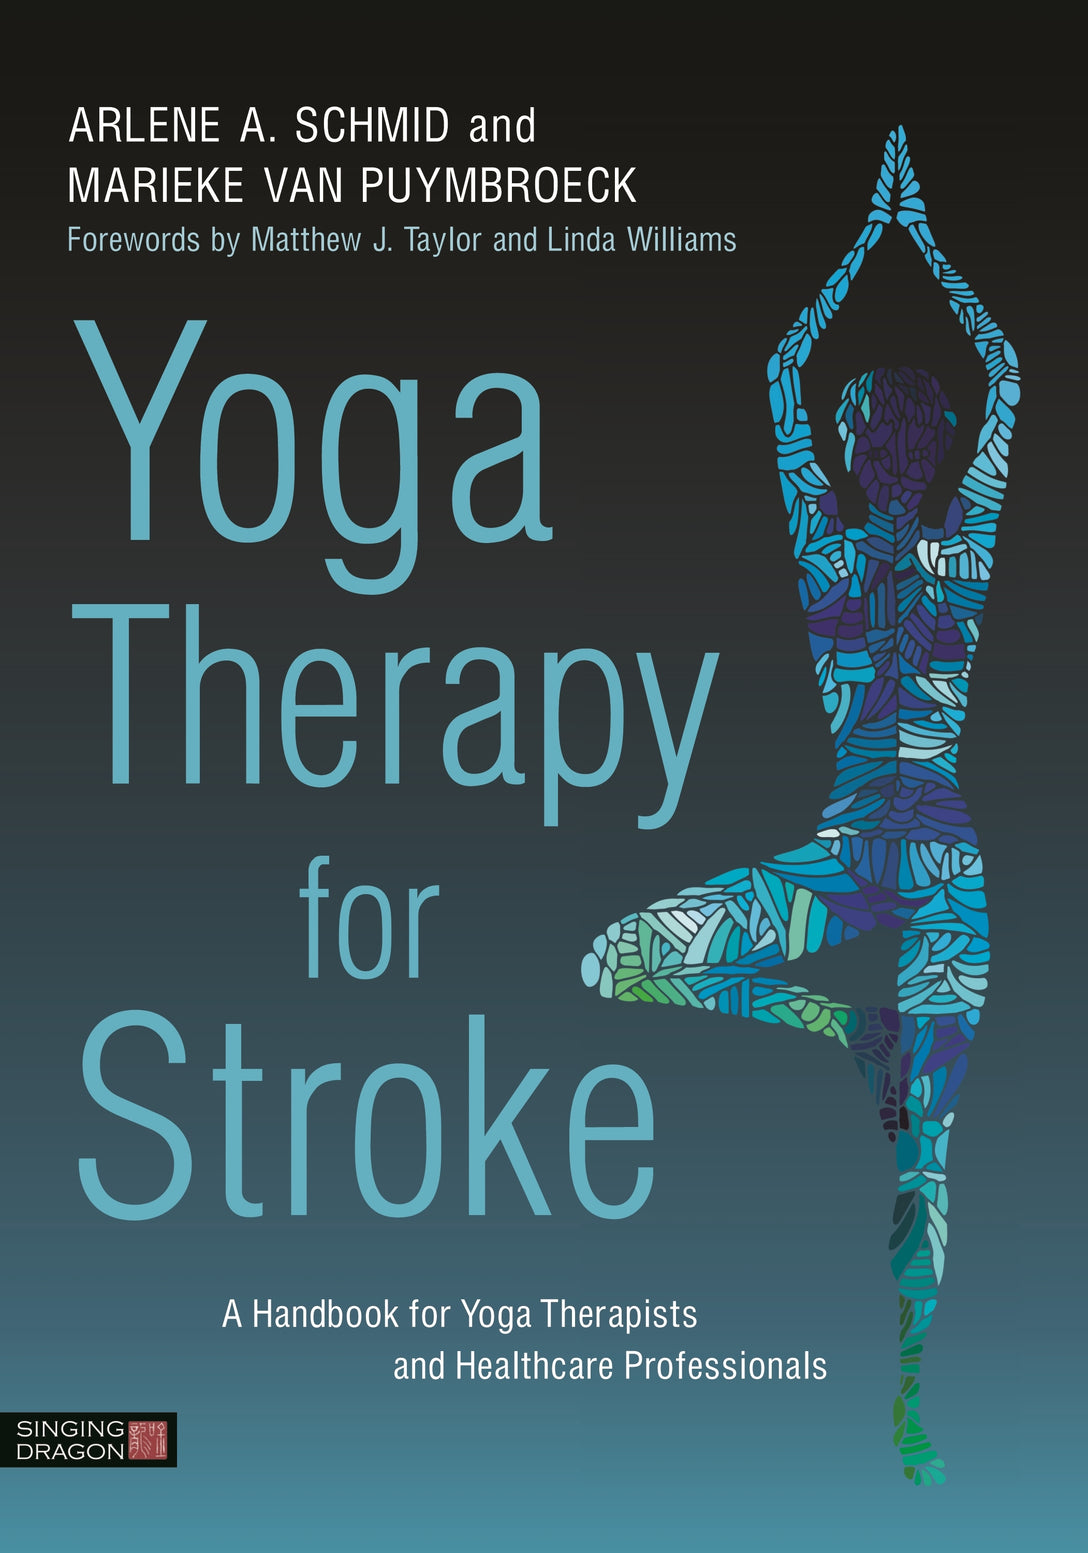 Yoga Therapy for Stroke by Arlene A. Schmid, Marieke van Puymbroeck, Matthew J. Taylor, Linda Williams